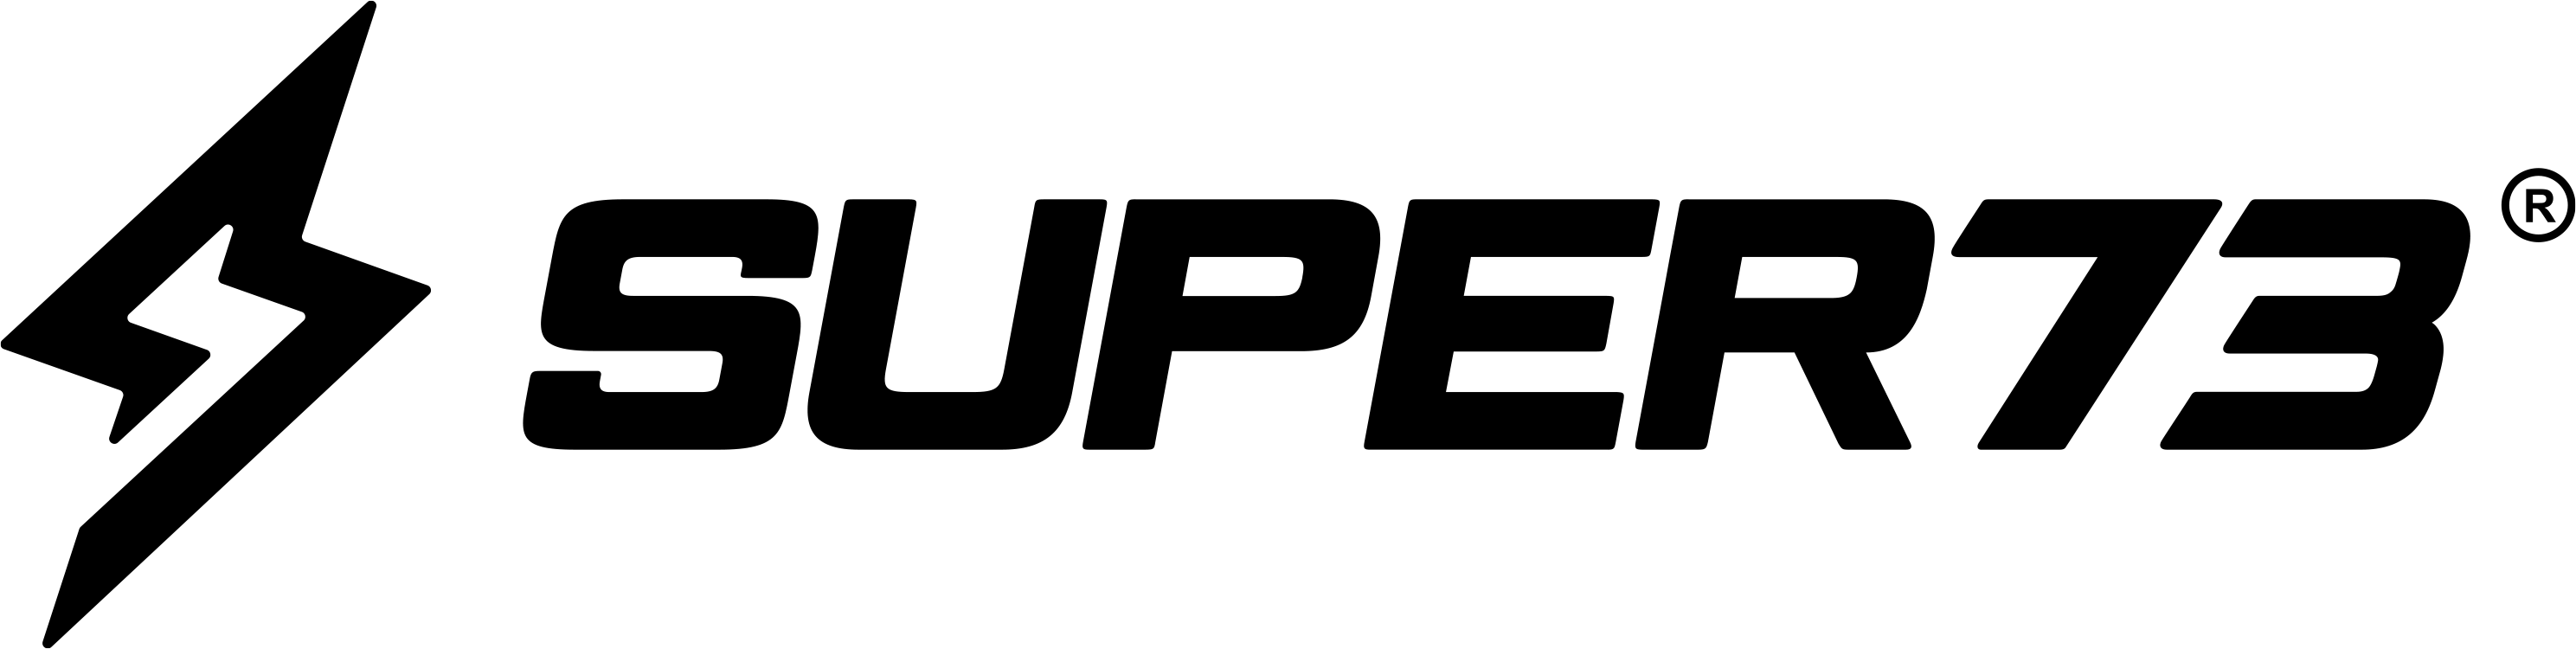 Super73 Logo Horizontal Trademark Black